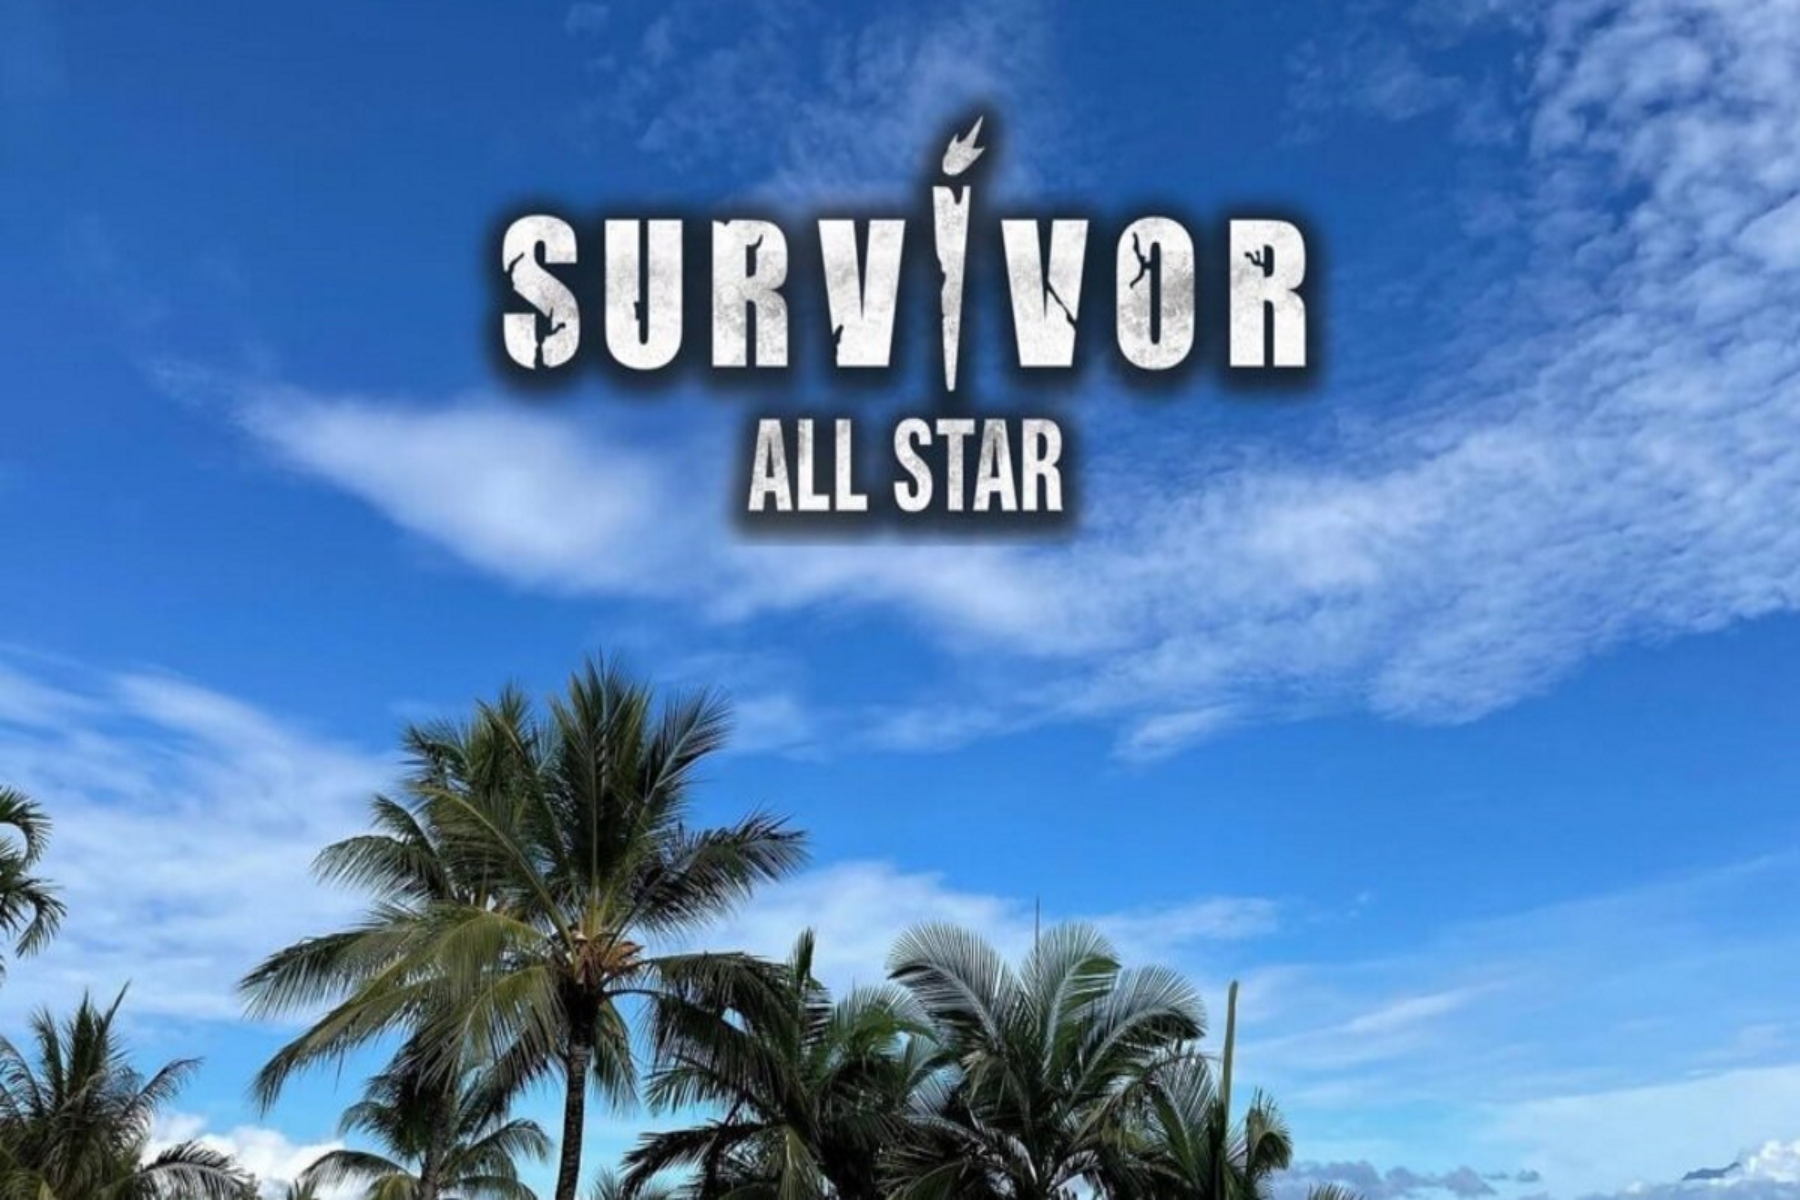 Survivor All Star 20/4: Νίκη για τους Μπλε λίγο πριν την αποχώρηση [trailer]